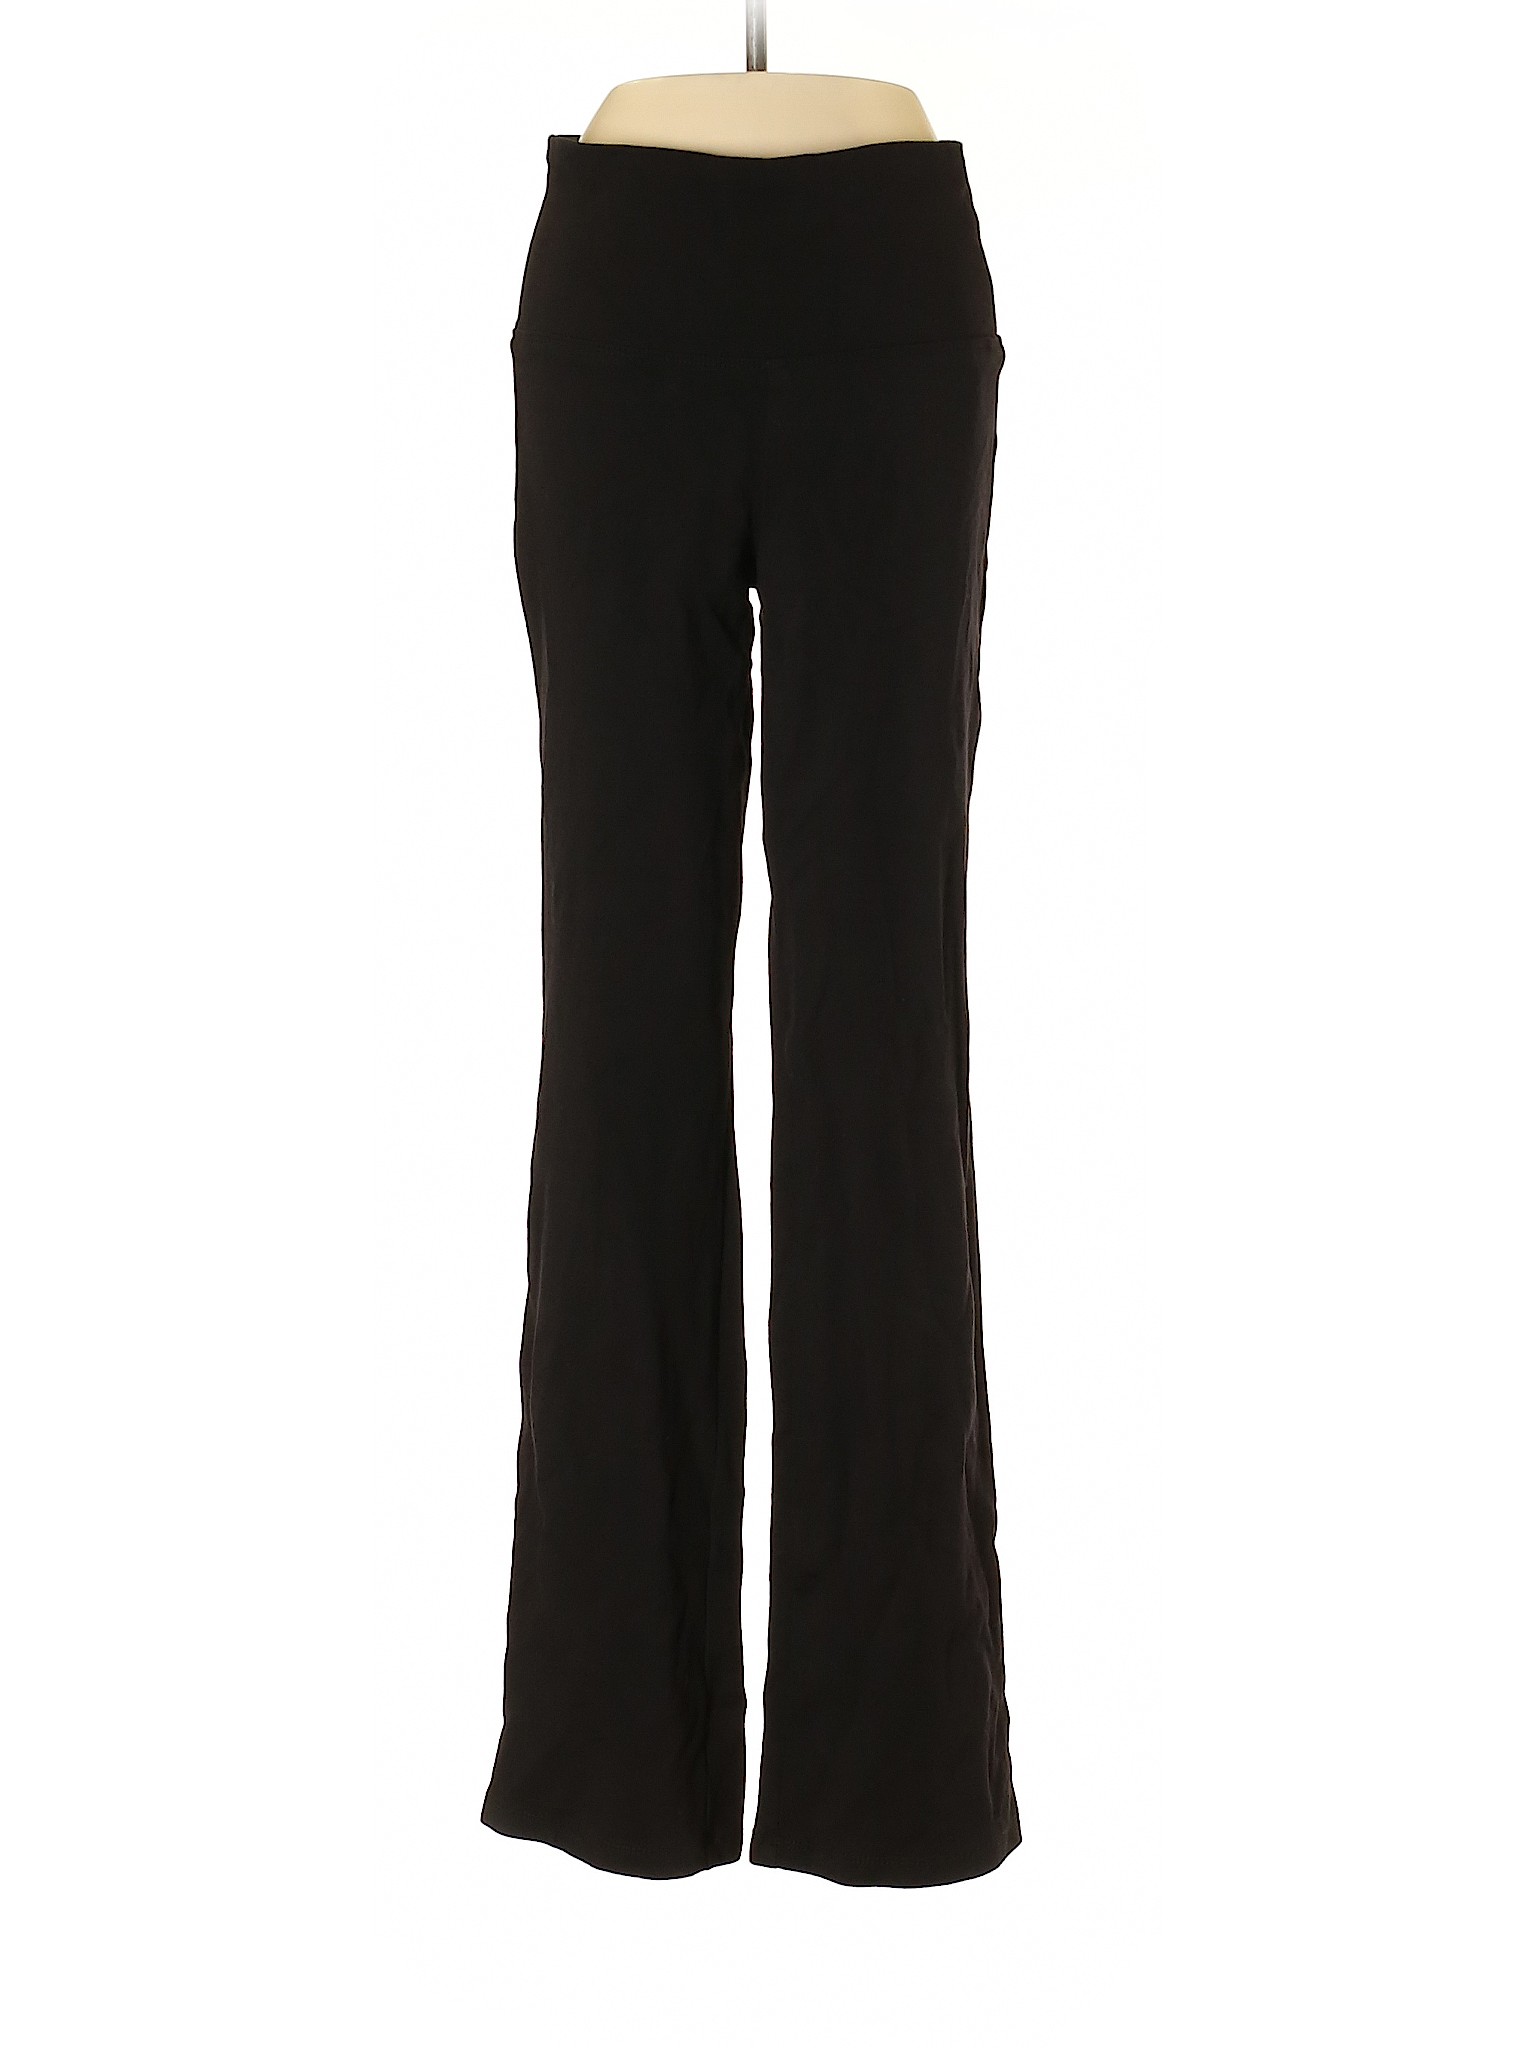 Liz Claiborne Women Black Casual Pants S | eBay